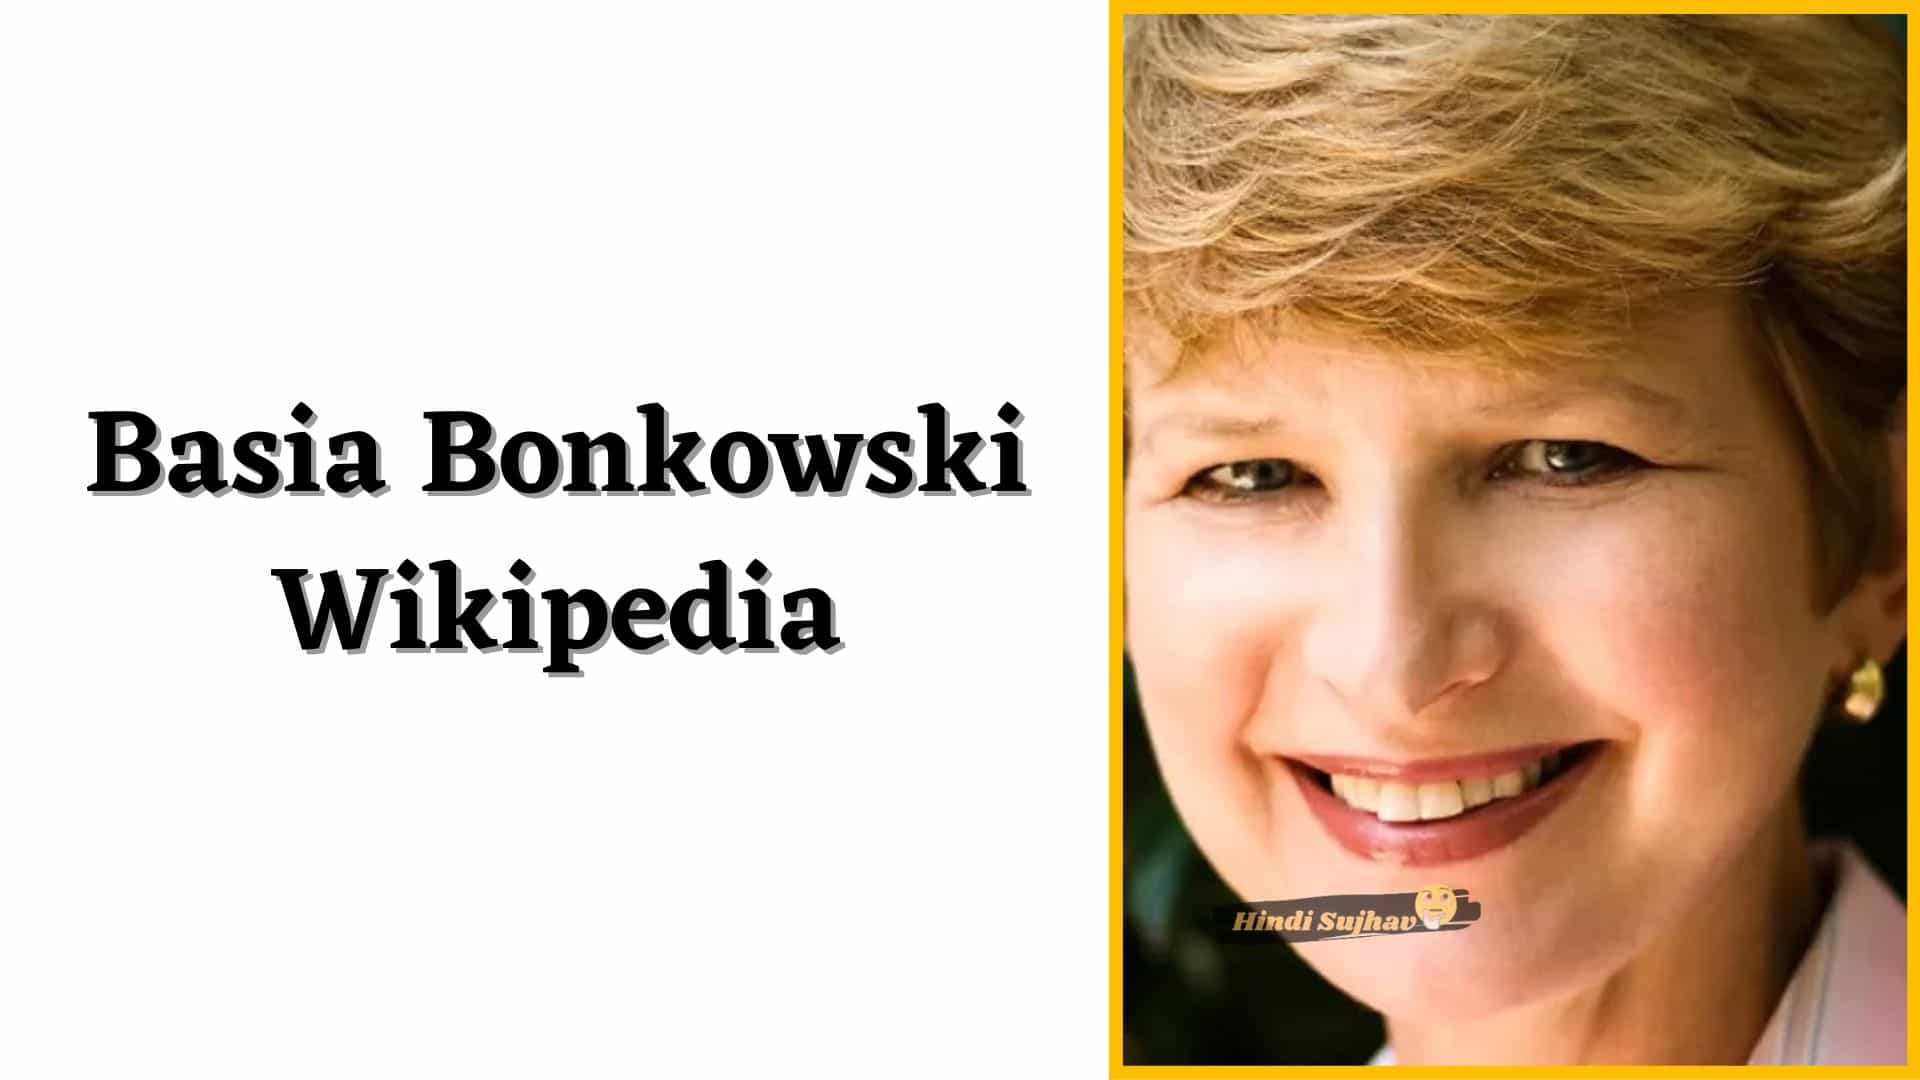 Basia Bonkowski Wikipedia, Wiki, Date of Birth, Age, Funeral